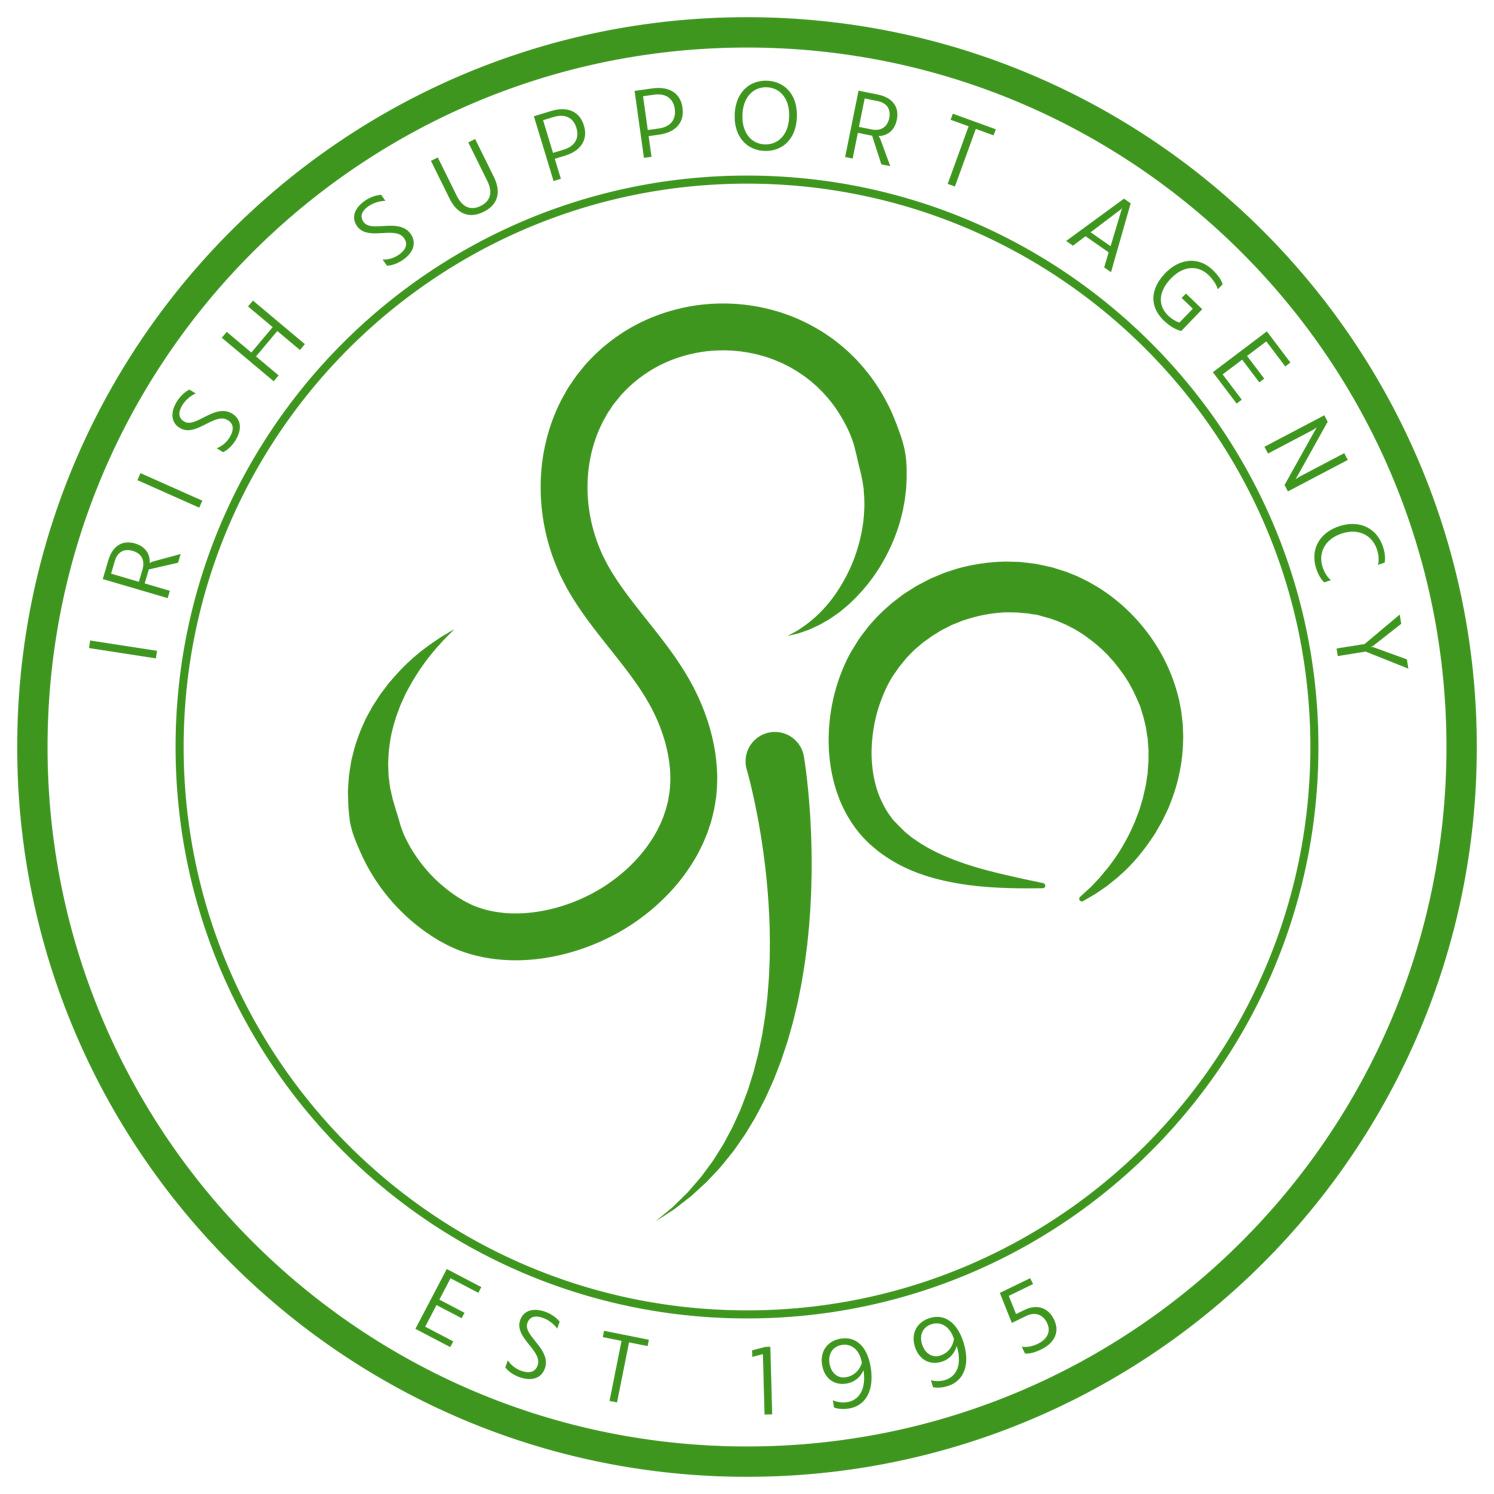 Irish Support Agency